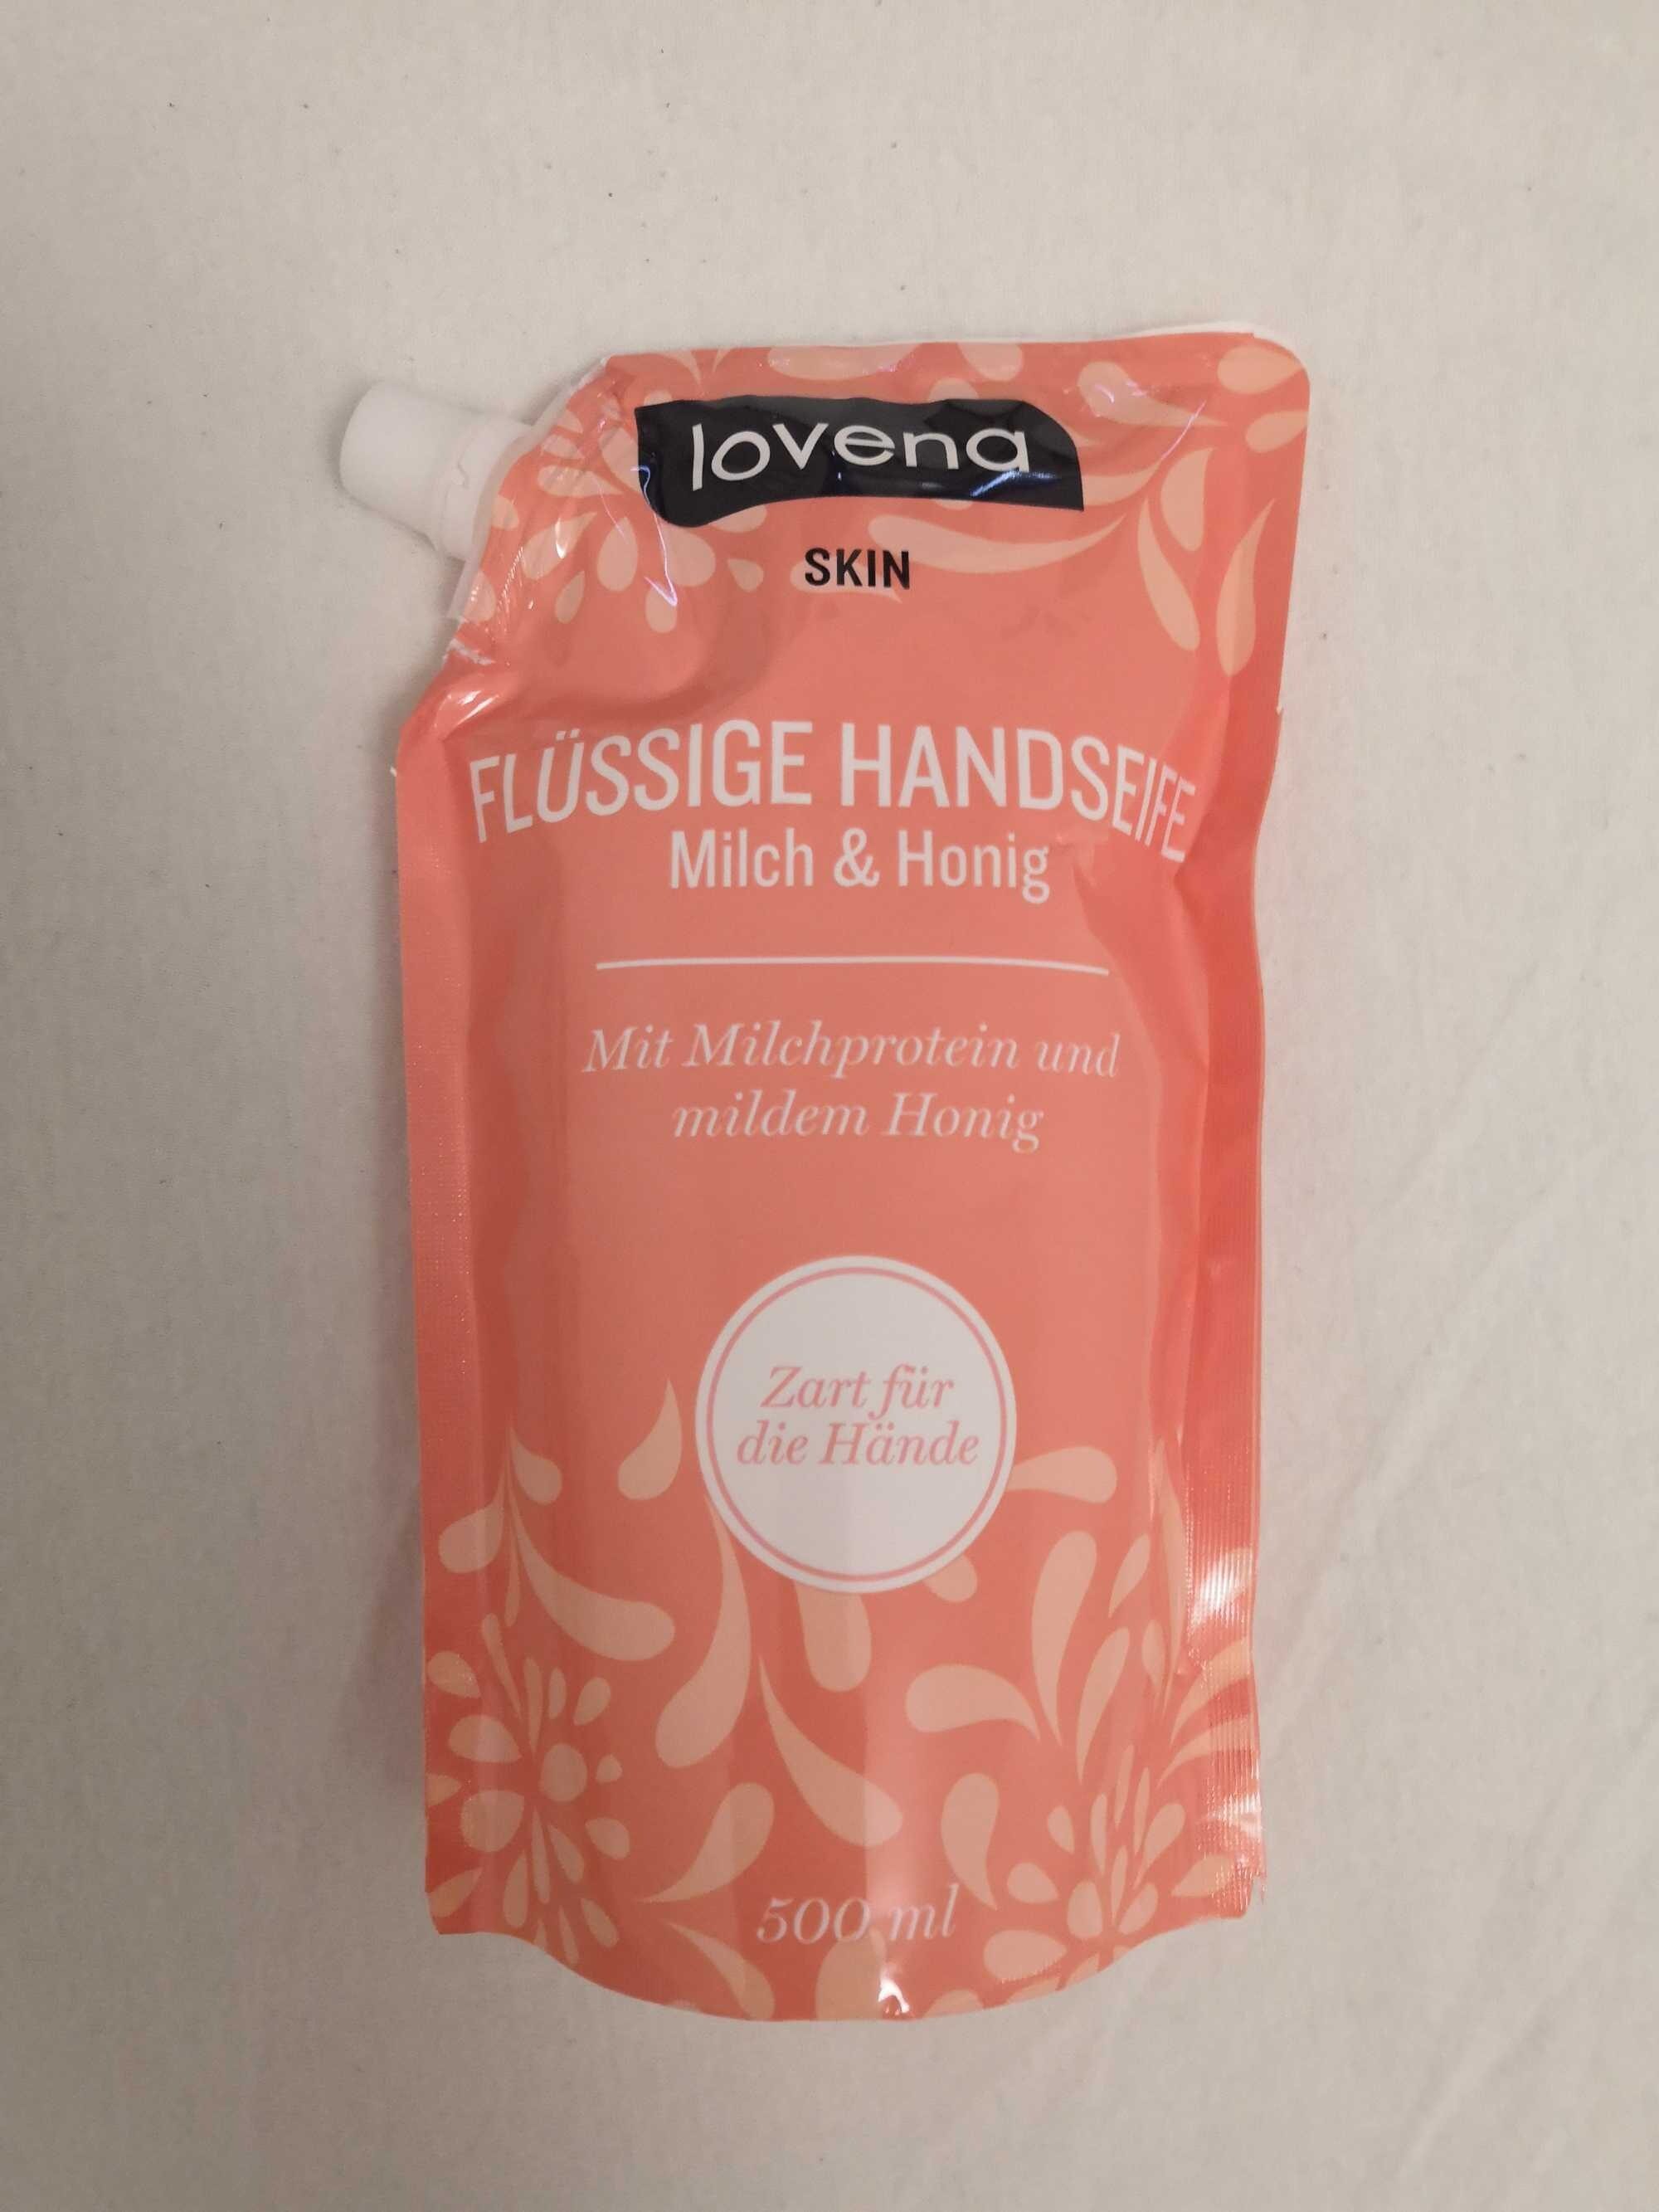 lovena Skin Flüssige Handseife Milch & Honig - Tuote - de